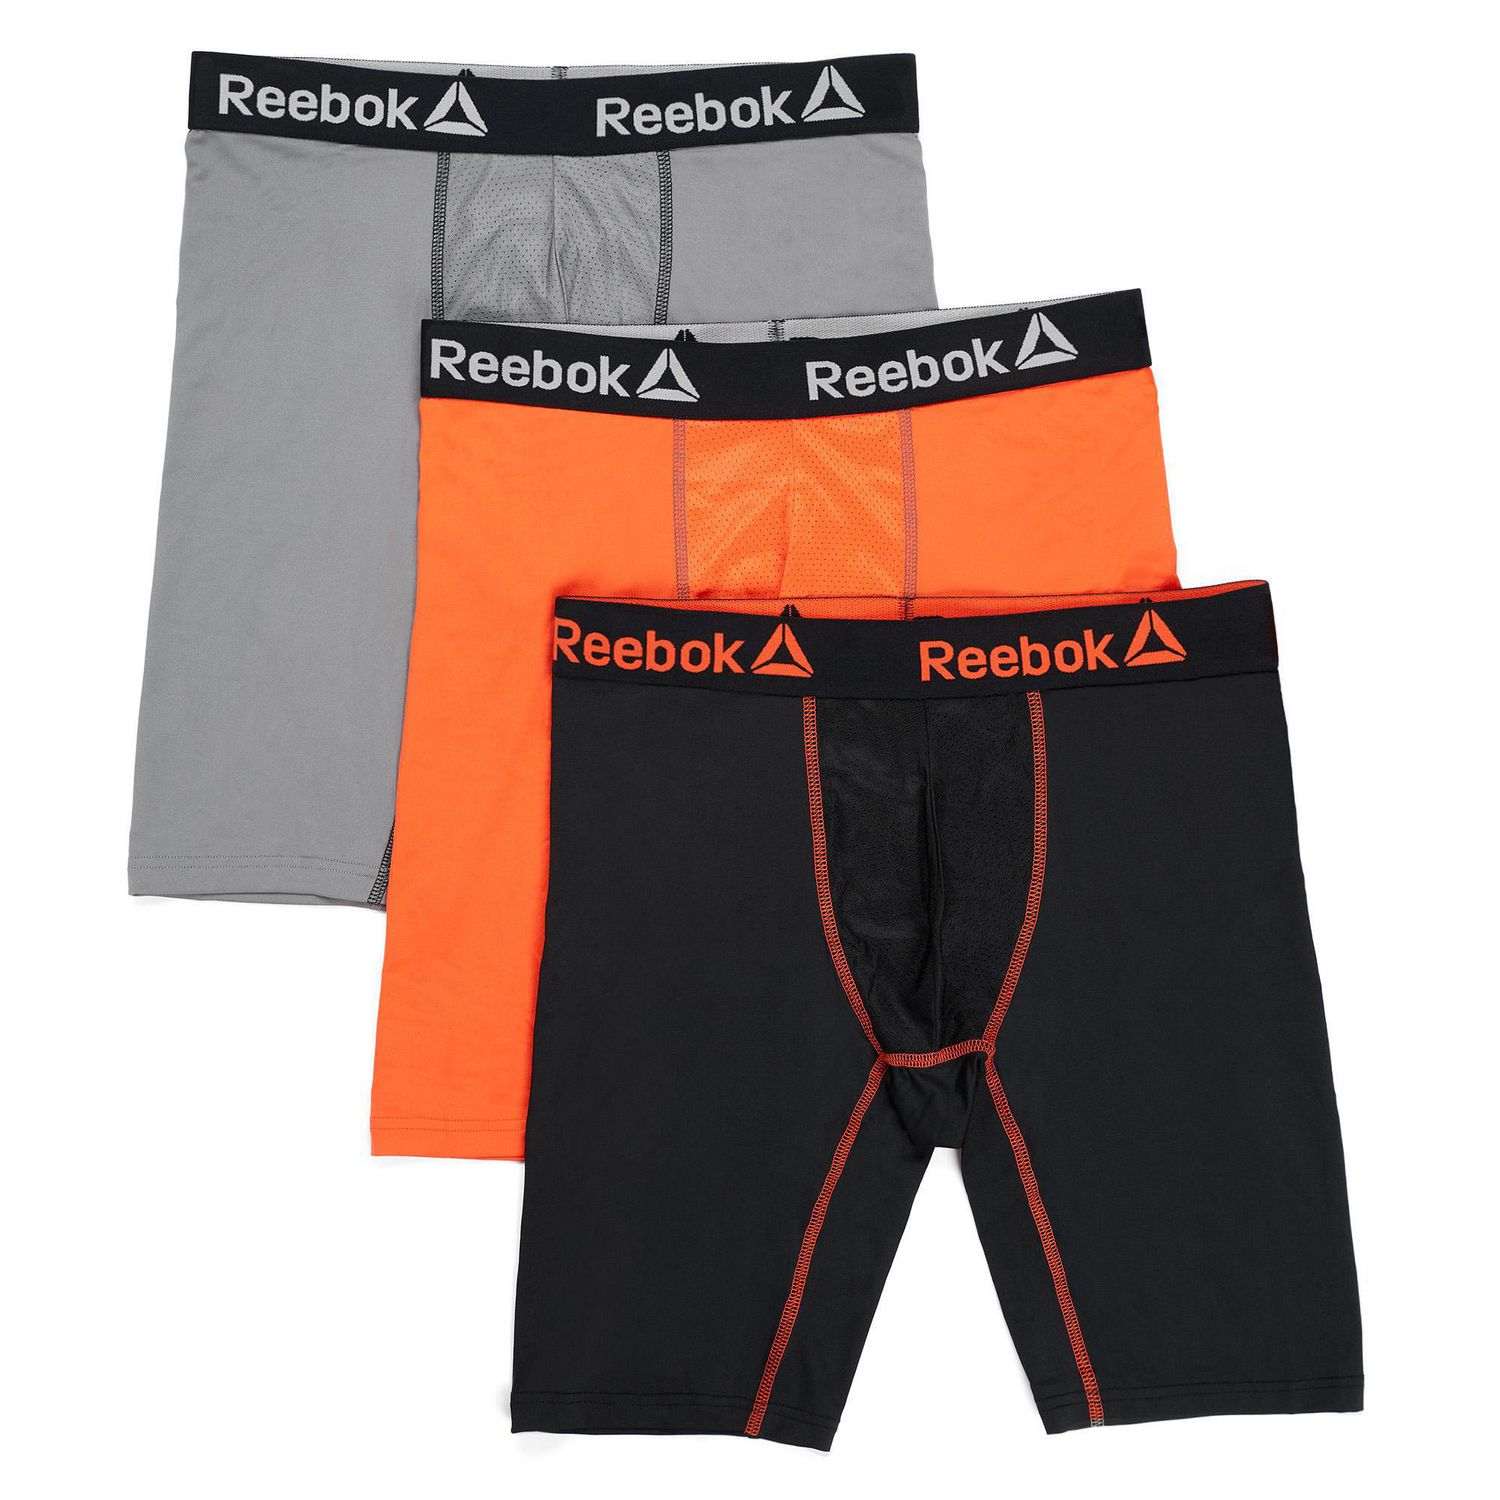 Reebok 3 Performance Long Leg Boxer Briefs 